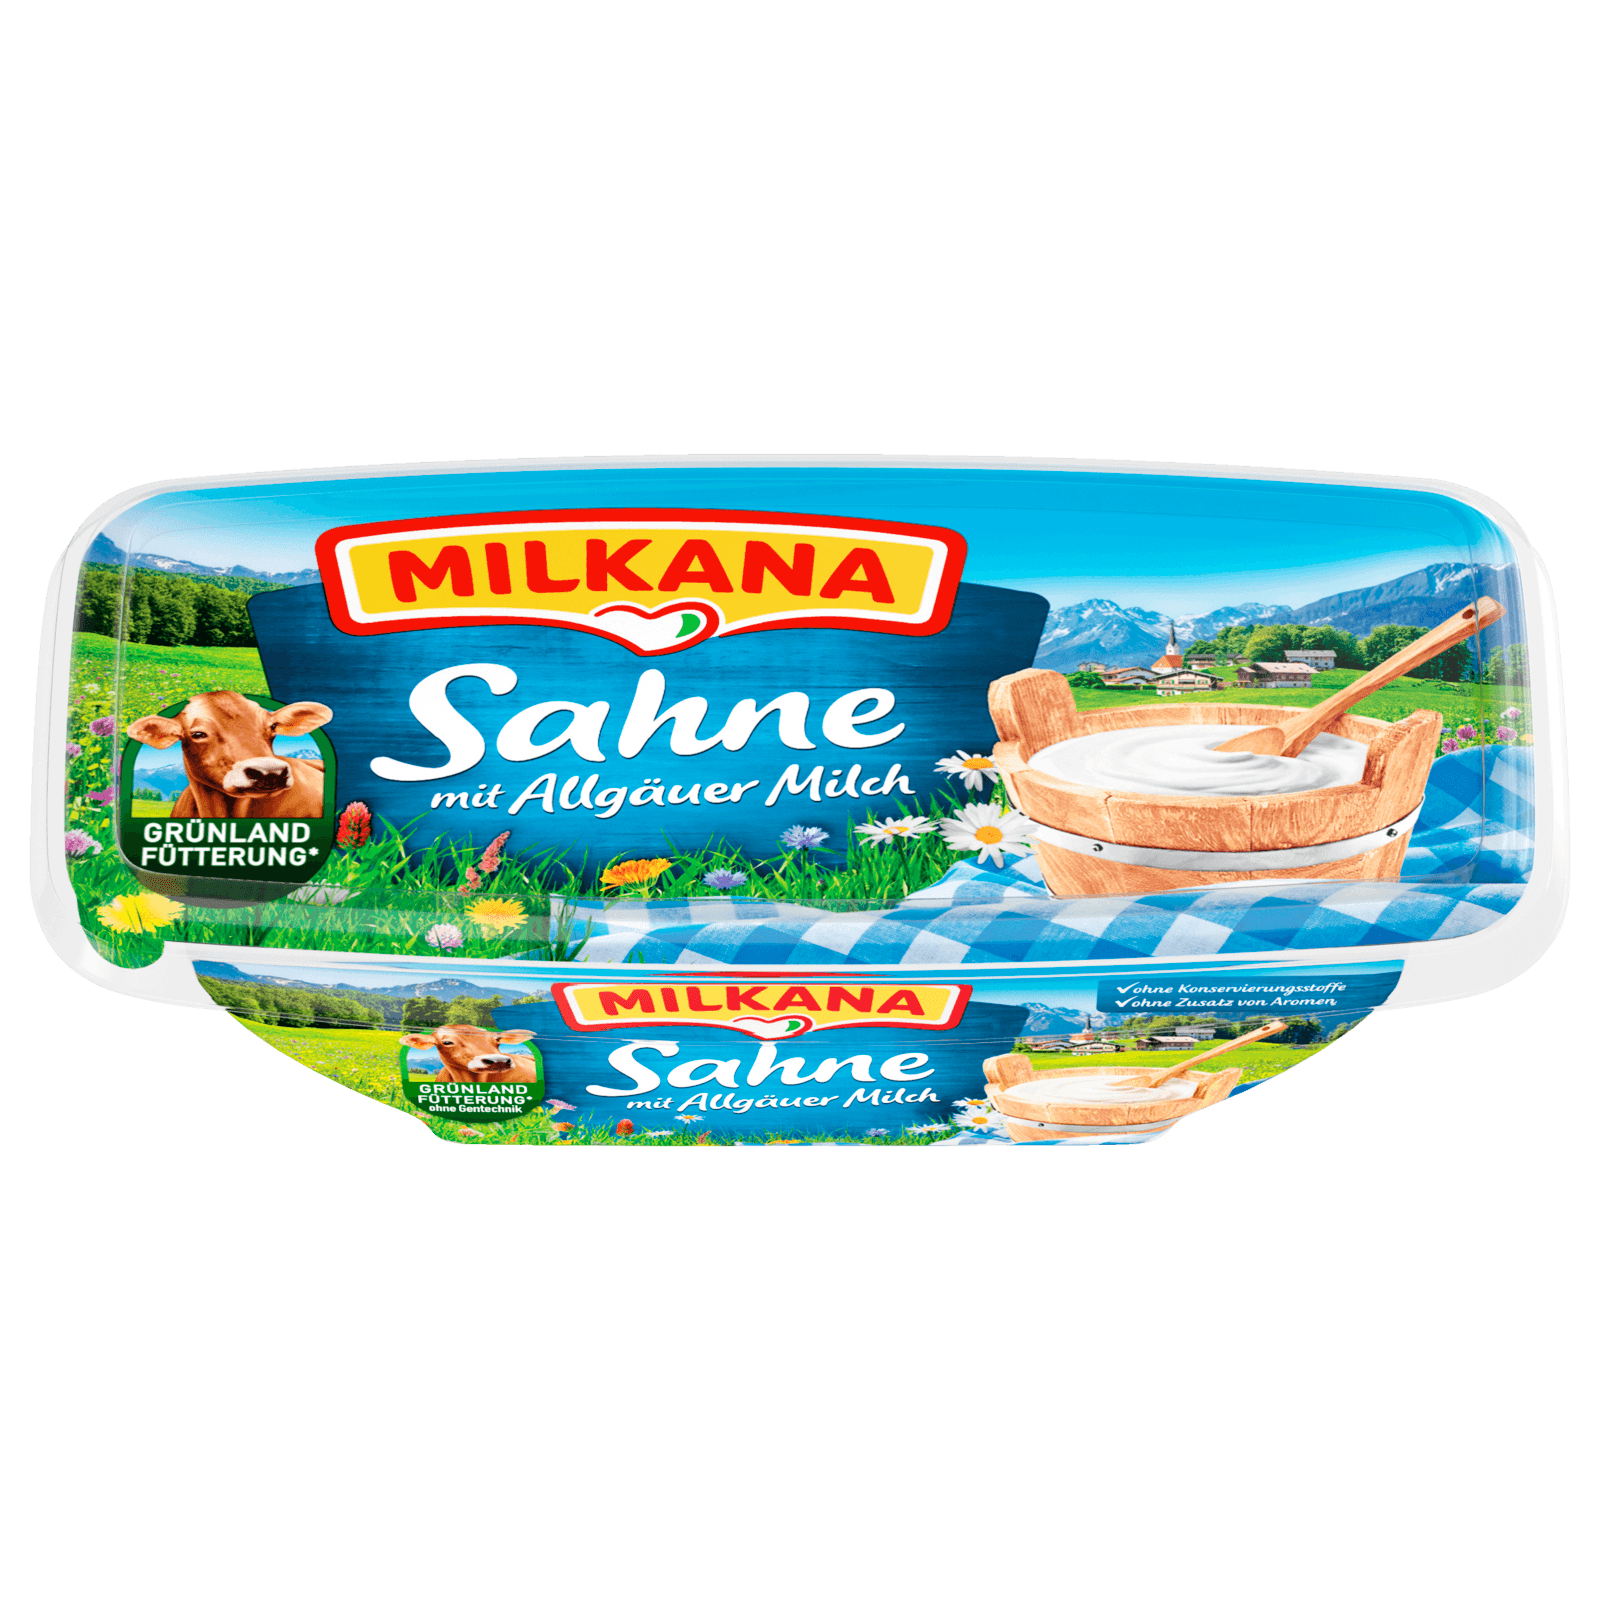 Milkana Schmelzkäse Sahne 190g bei REWE bestellen! online